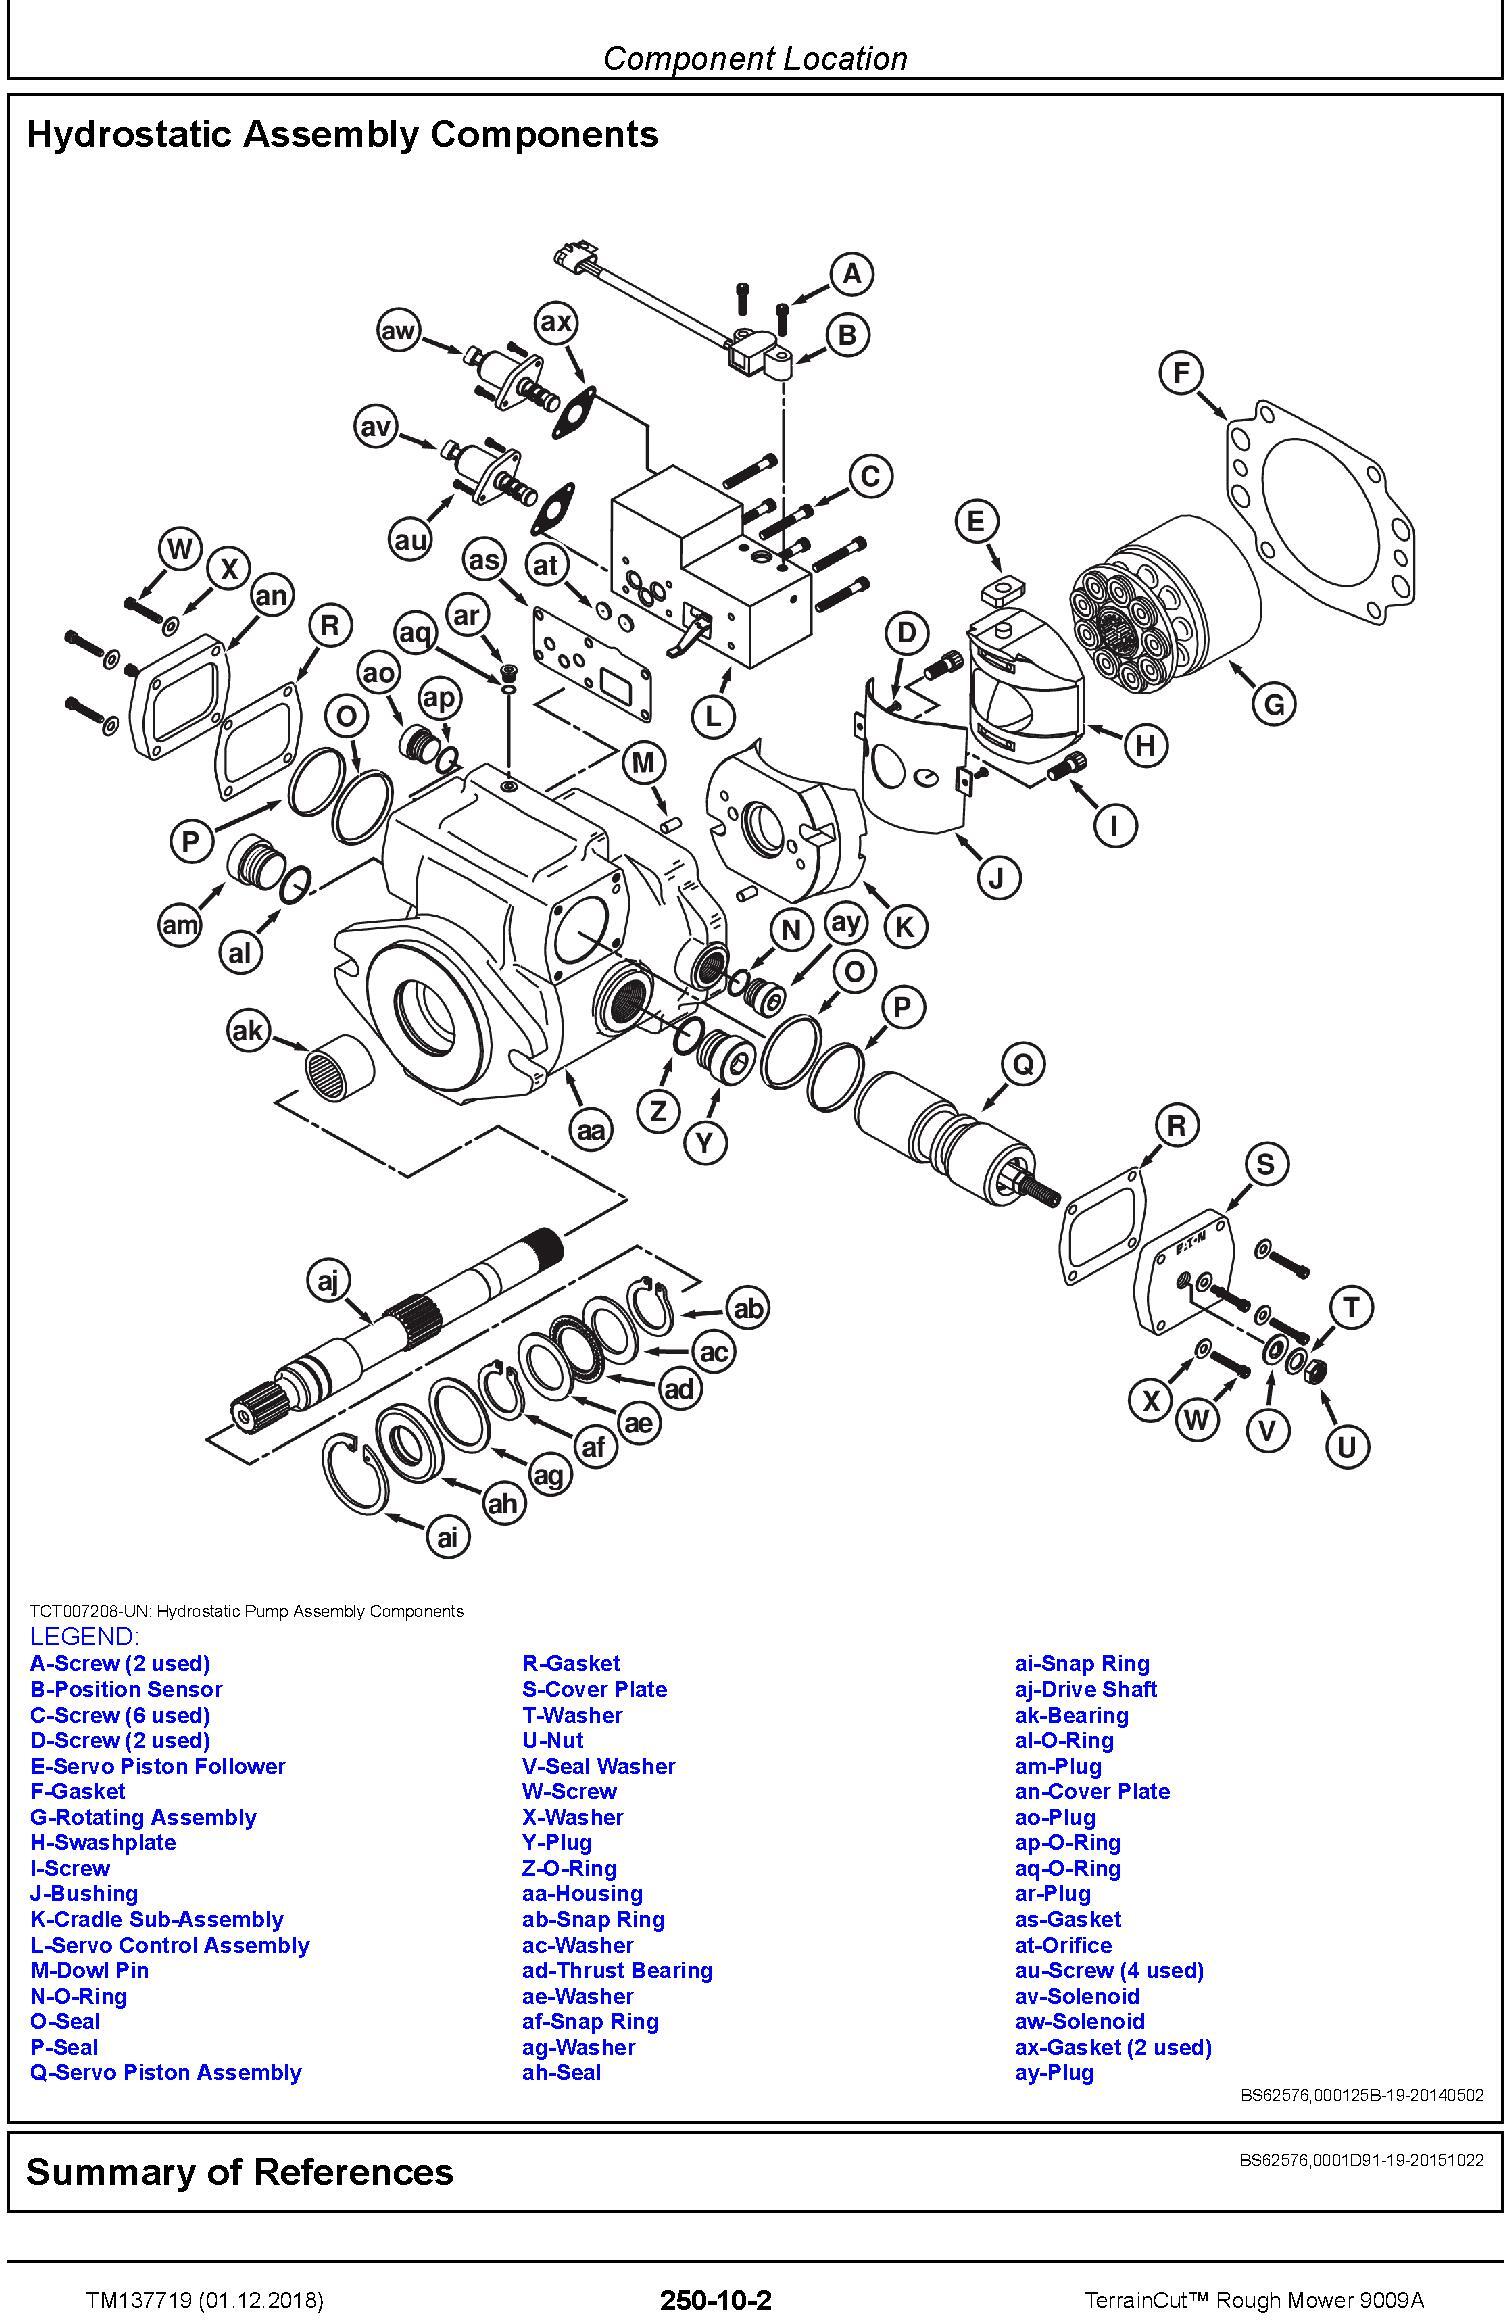 John Deere TerrainCut Rough Mower 9009A Technical Service Manual (TM137719) - 3